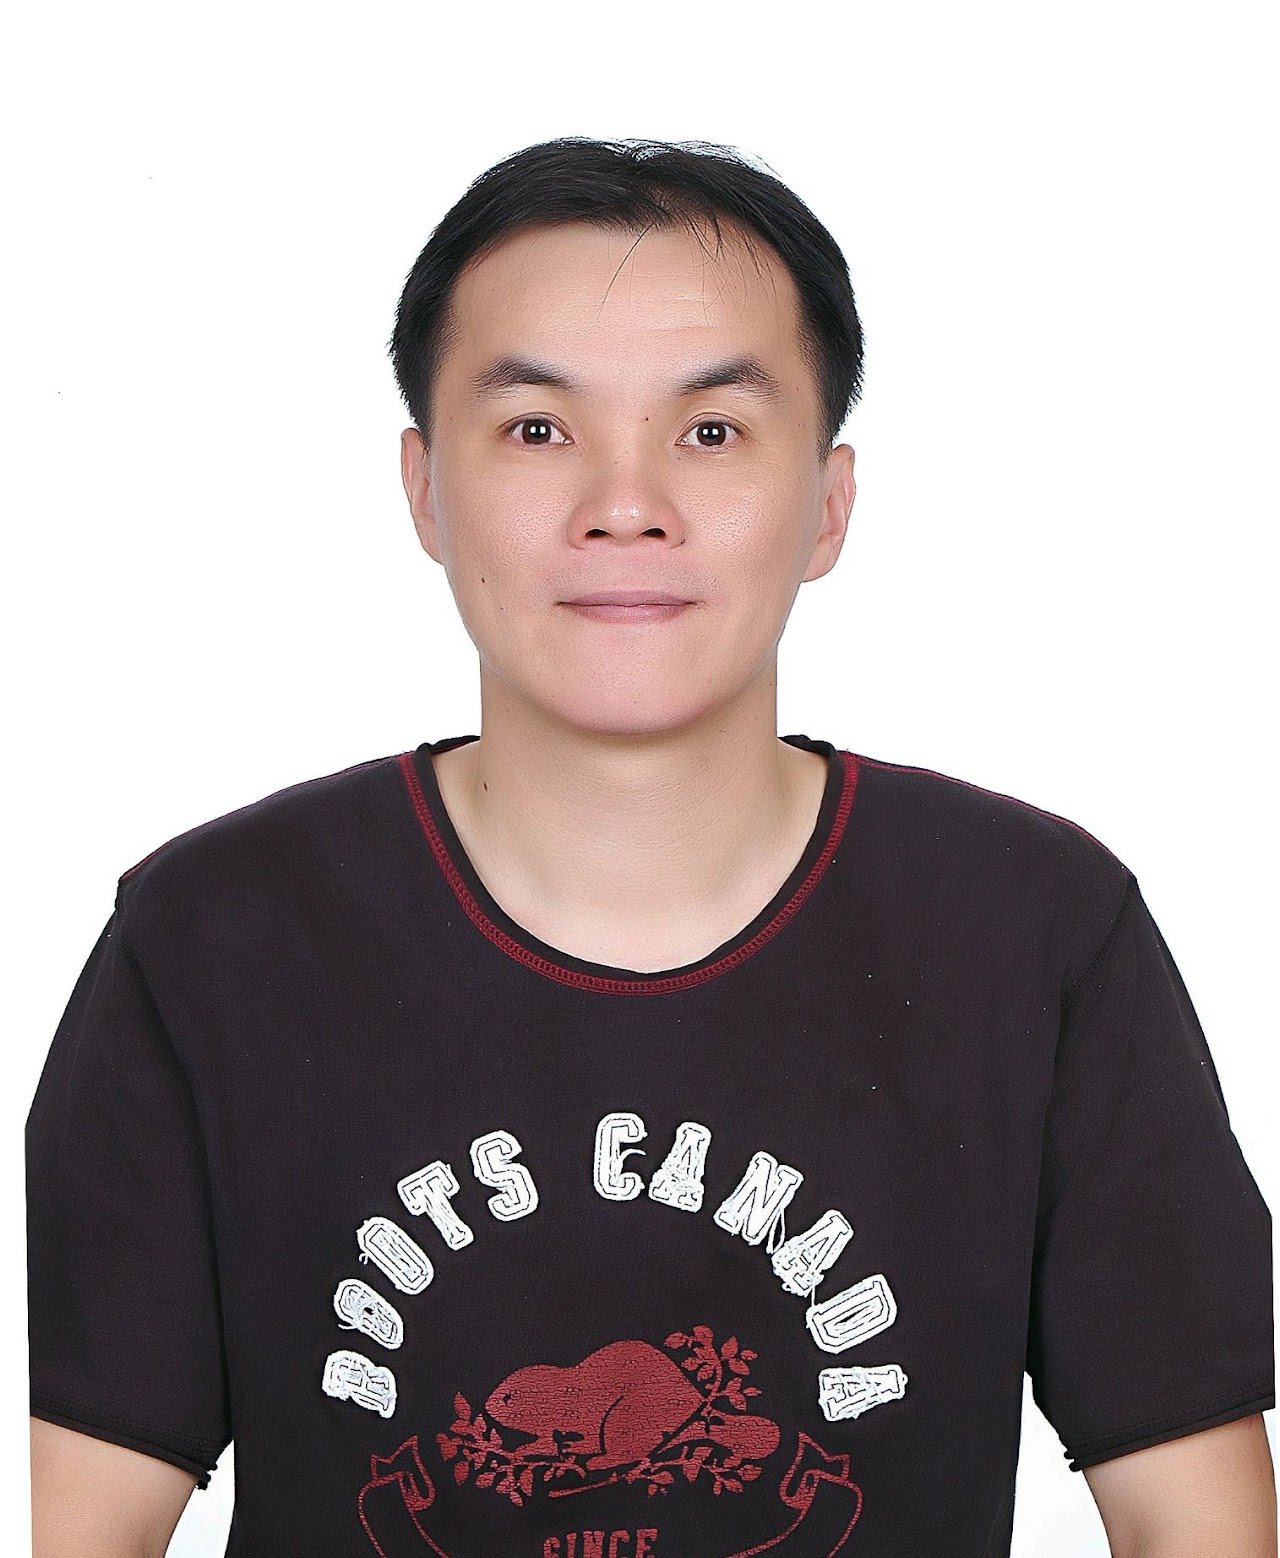 Prof. Chih-Chia Cheng